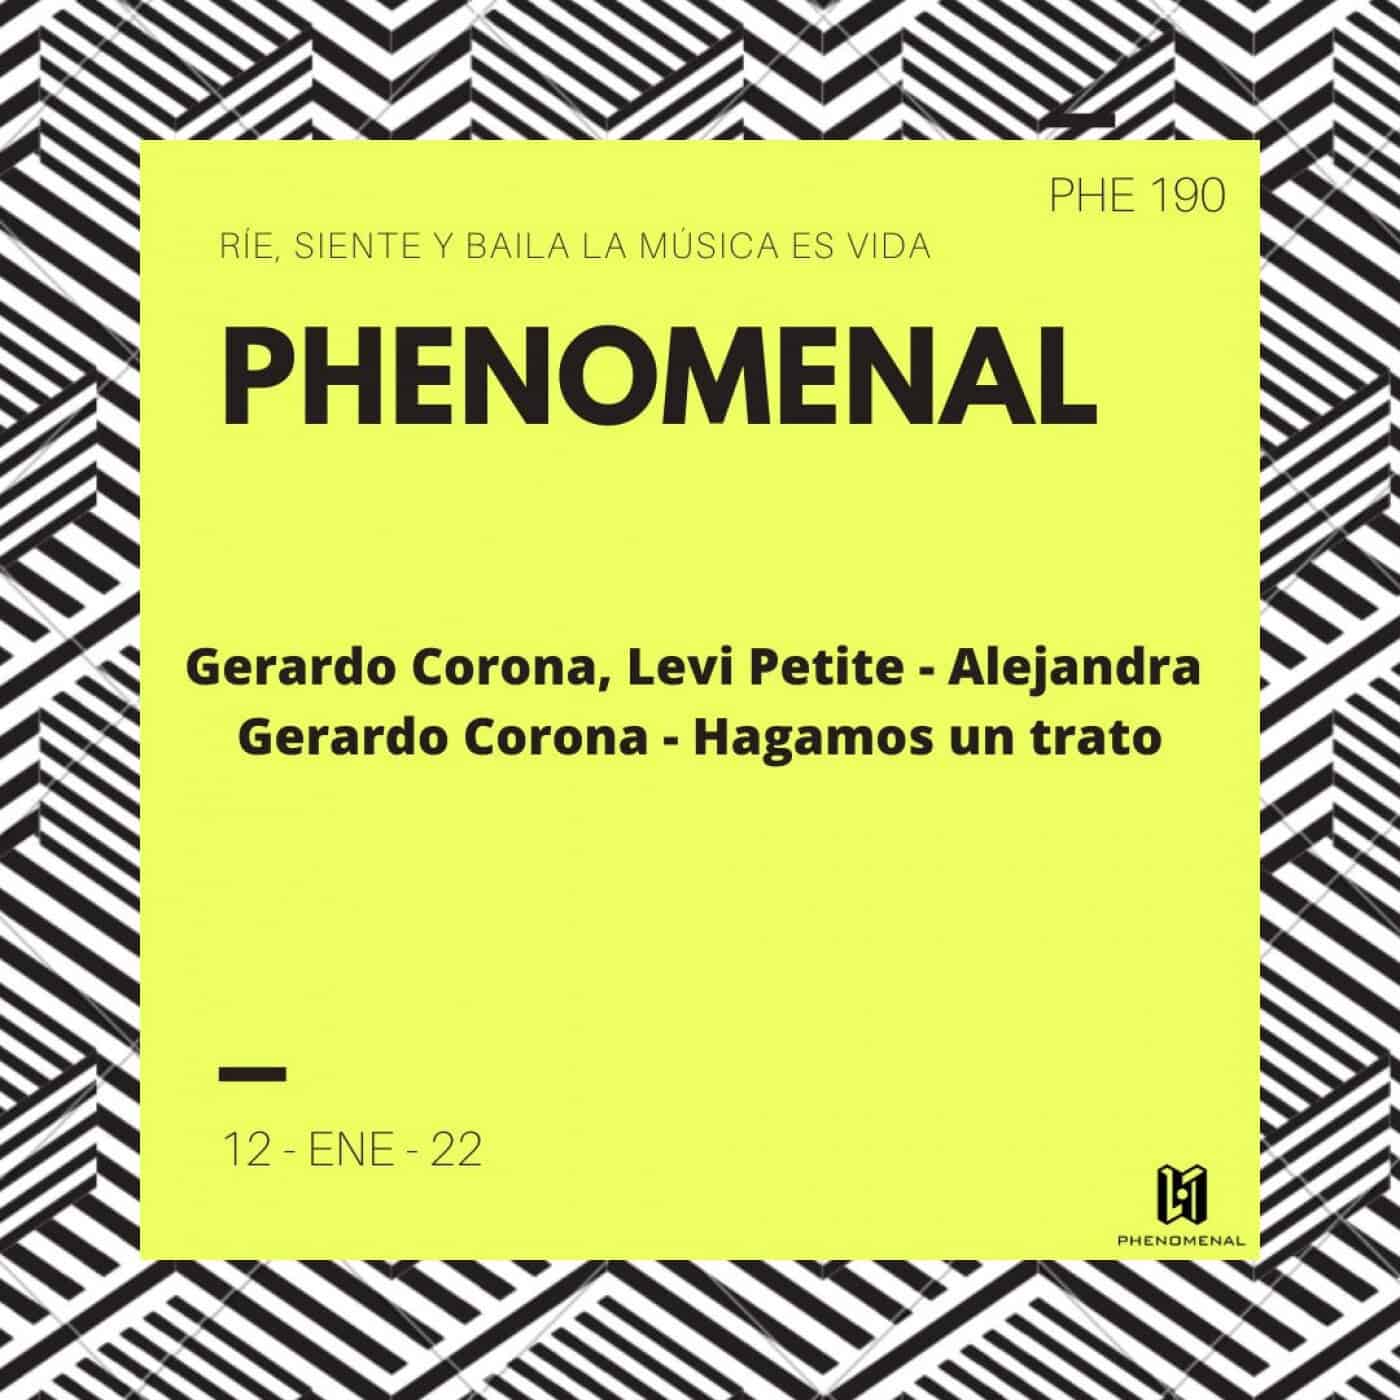 image cover: Levi Petite, Gerardo Corona - Alejandra / PHE190